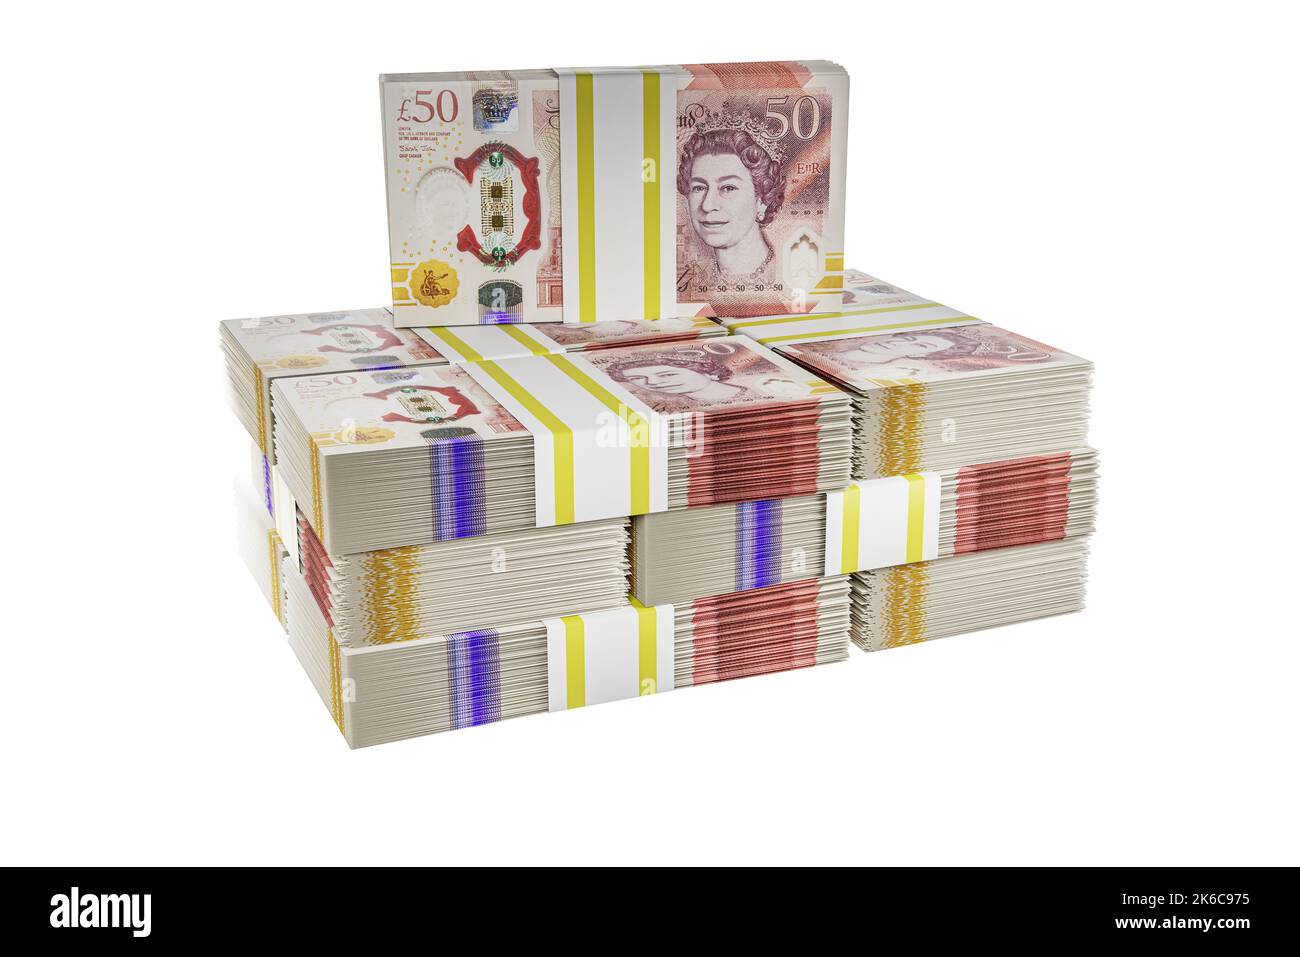 Stapel Stapel Stapel britischer Geldstapel Stapel britischer Polymer-£50-Scheine bündeln Bündeln von 50-Pfund-Banknoten Stockfoto